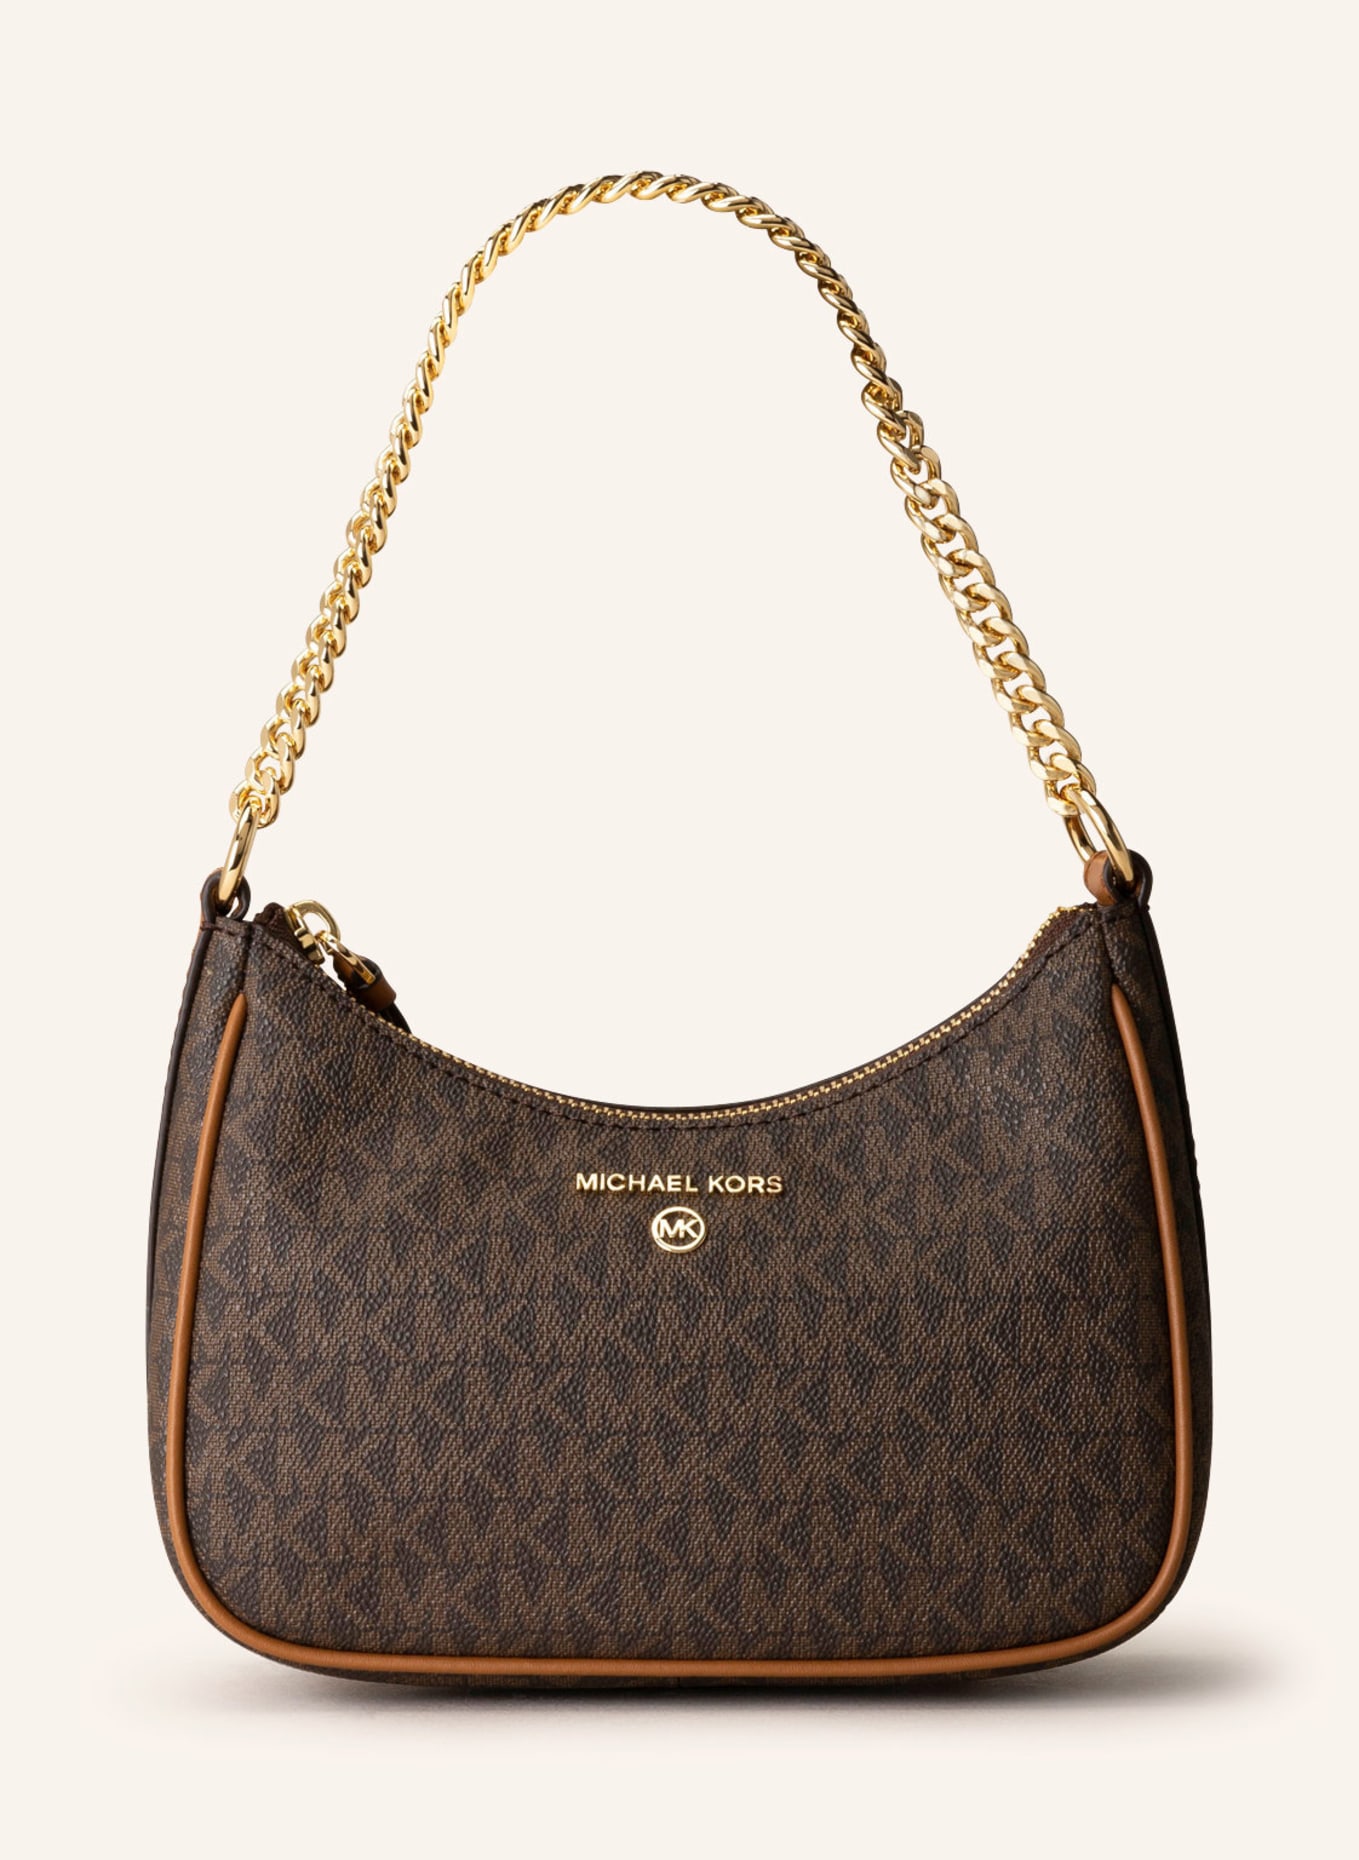 MICHAEL KORS Handbag Cognac Natural Brown Leather Purse Satchel Doctors Bag  ~NEW | eBay